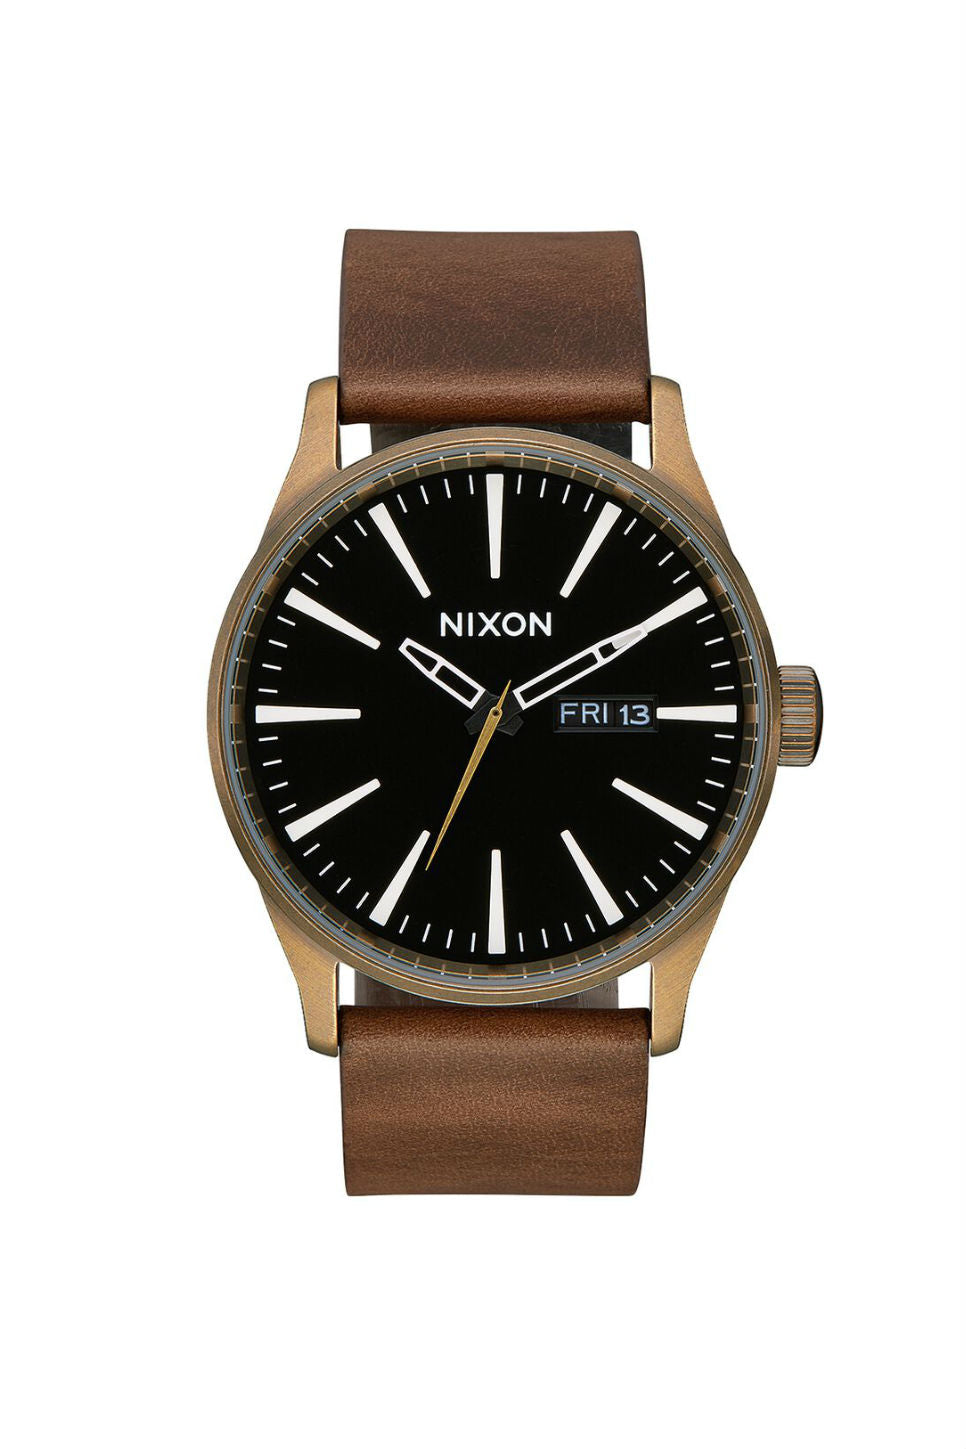 Nixon - Sentry Leather Watch - Brass/Black/Brown - Front